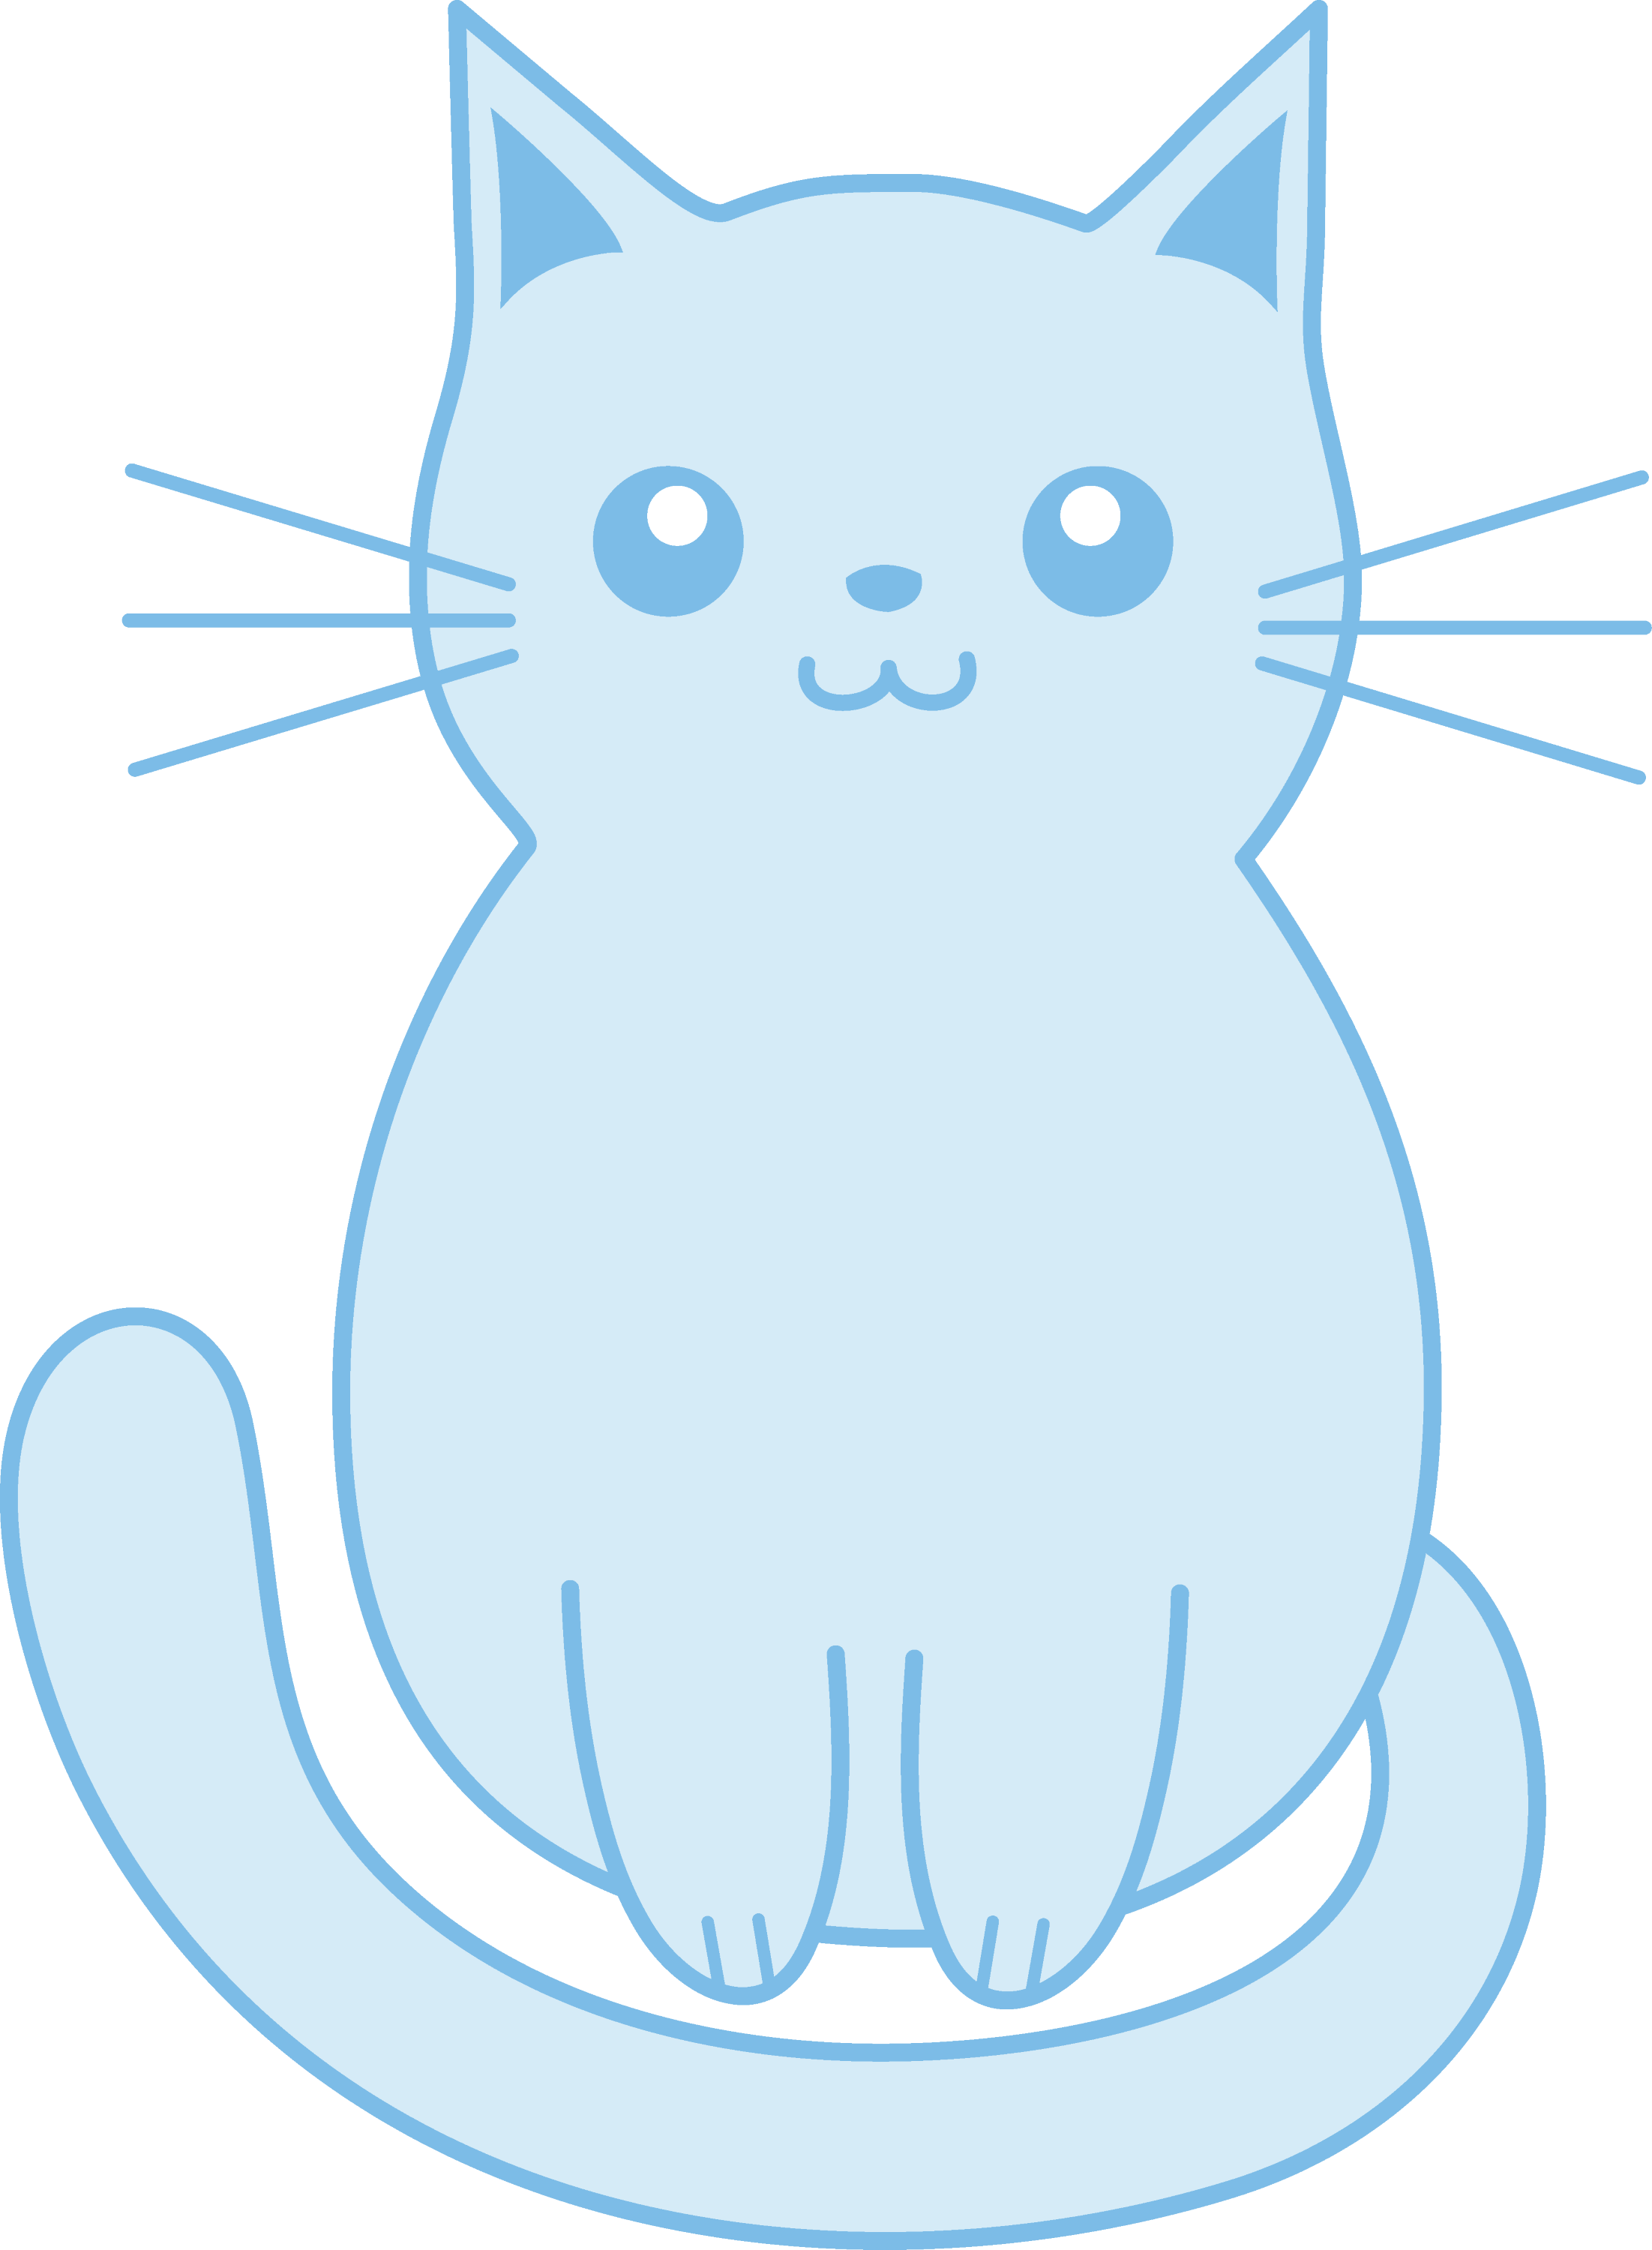 Cute Blue Kitten Clip Art - Free Clip Art